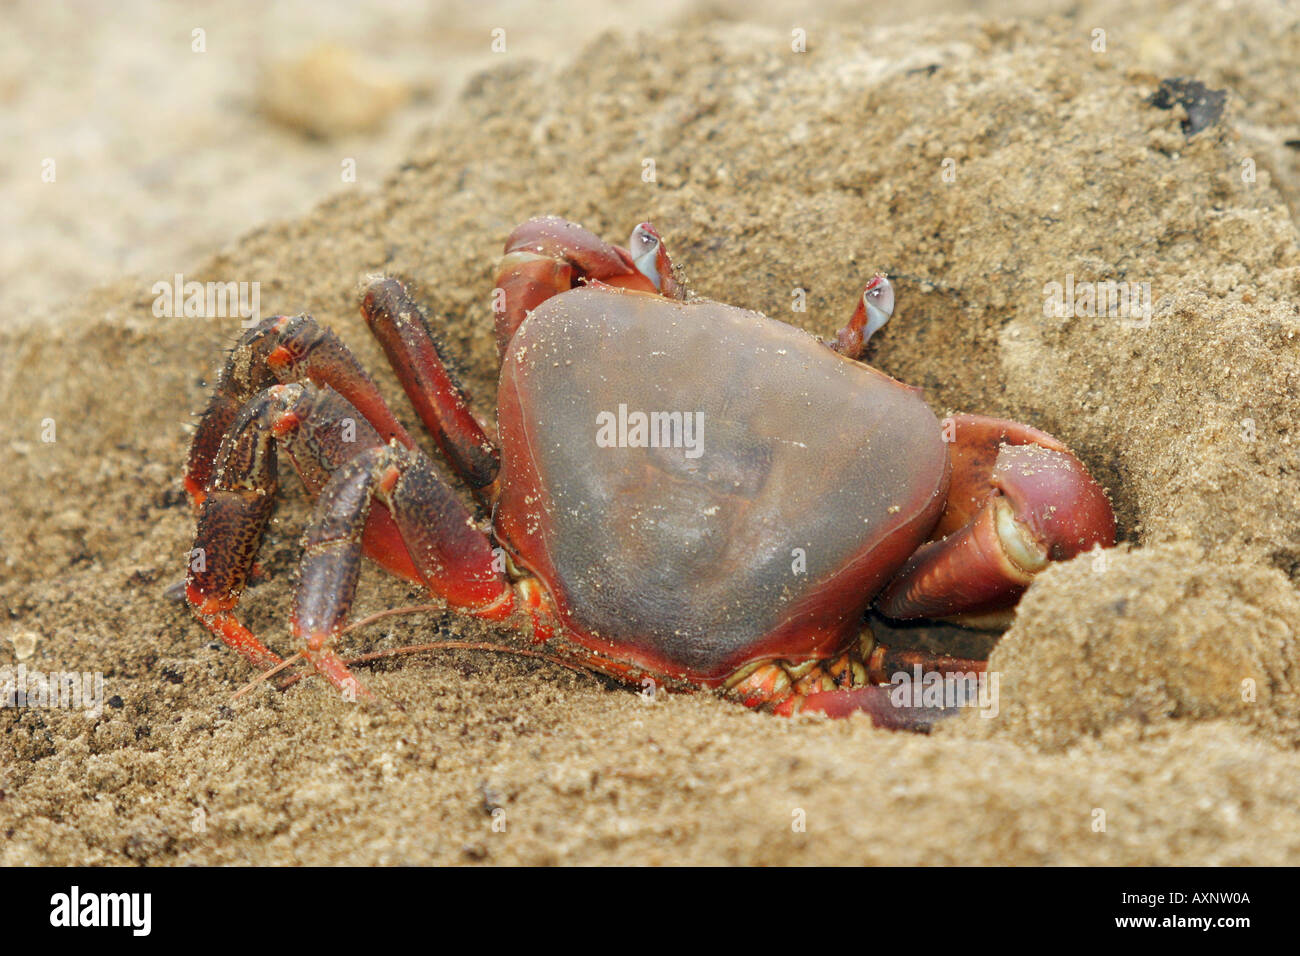 red claw crab Sesarma bidens Stock Photo